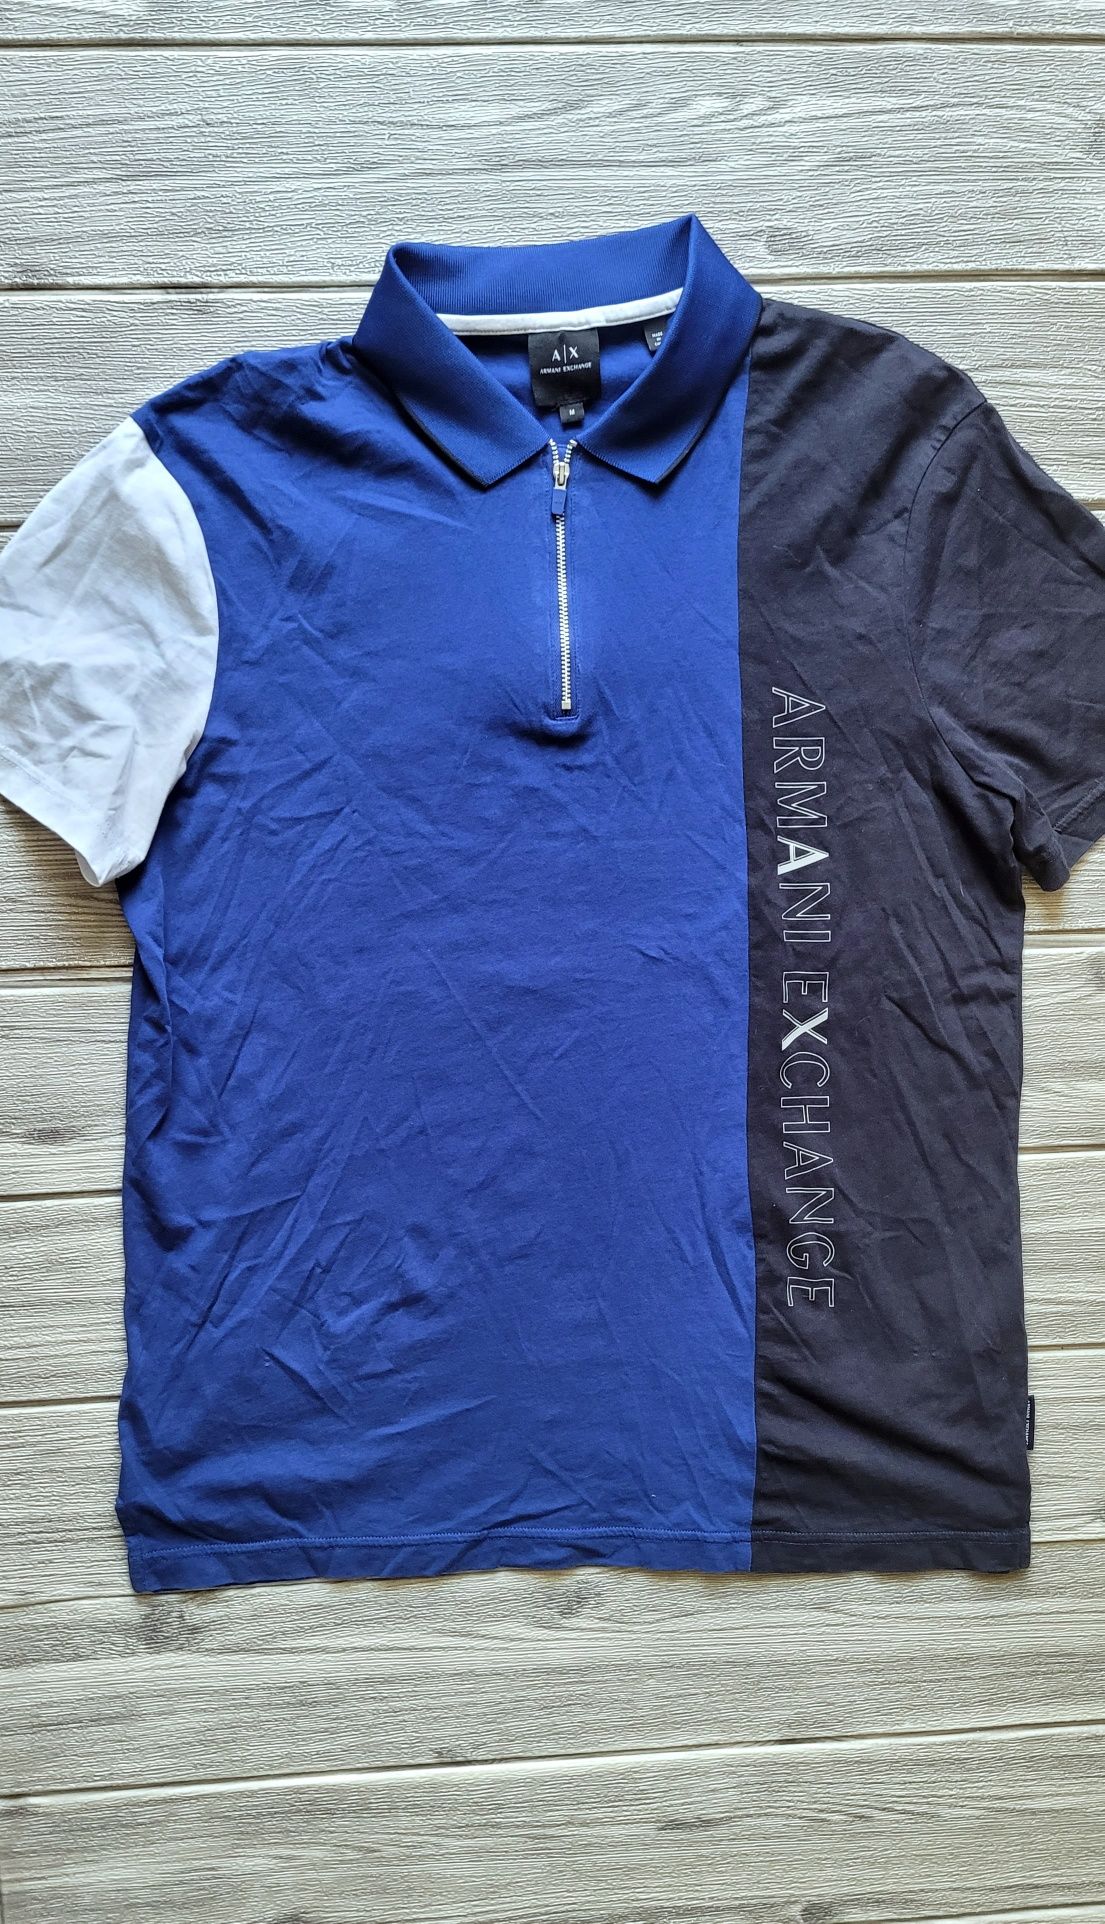 Koszulka polo Armani Exchange męska stylowa sportowa t-shirt lekka S M